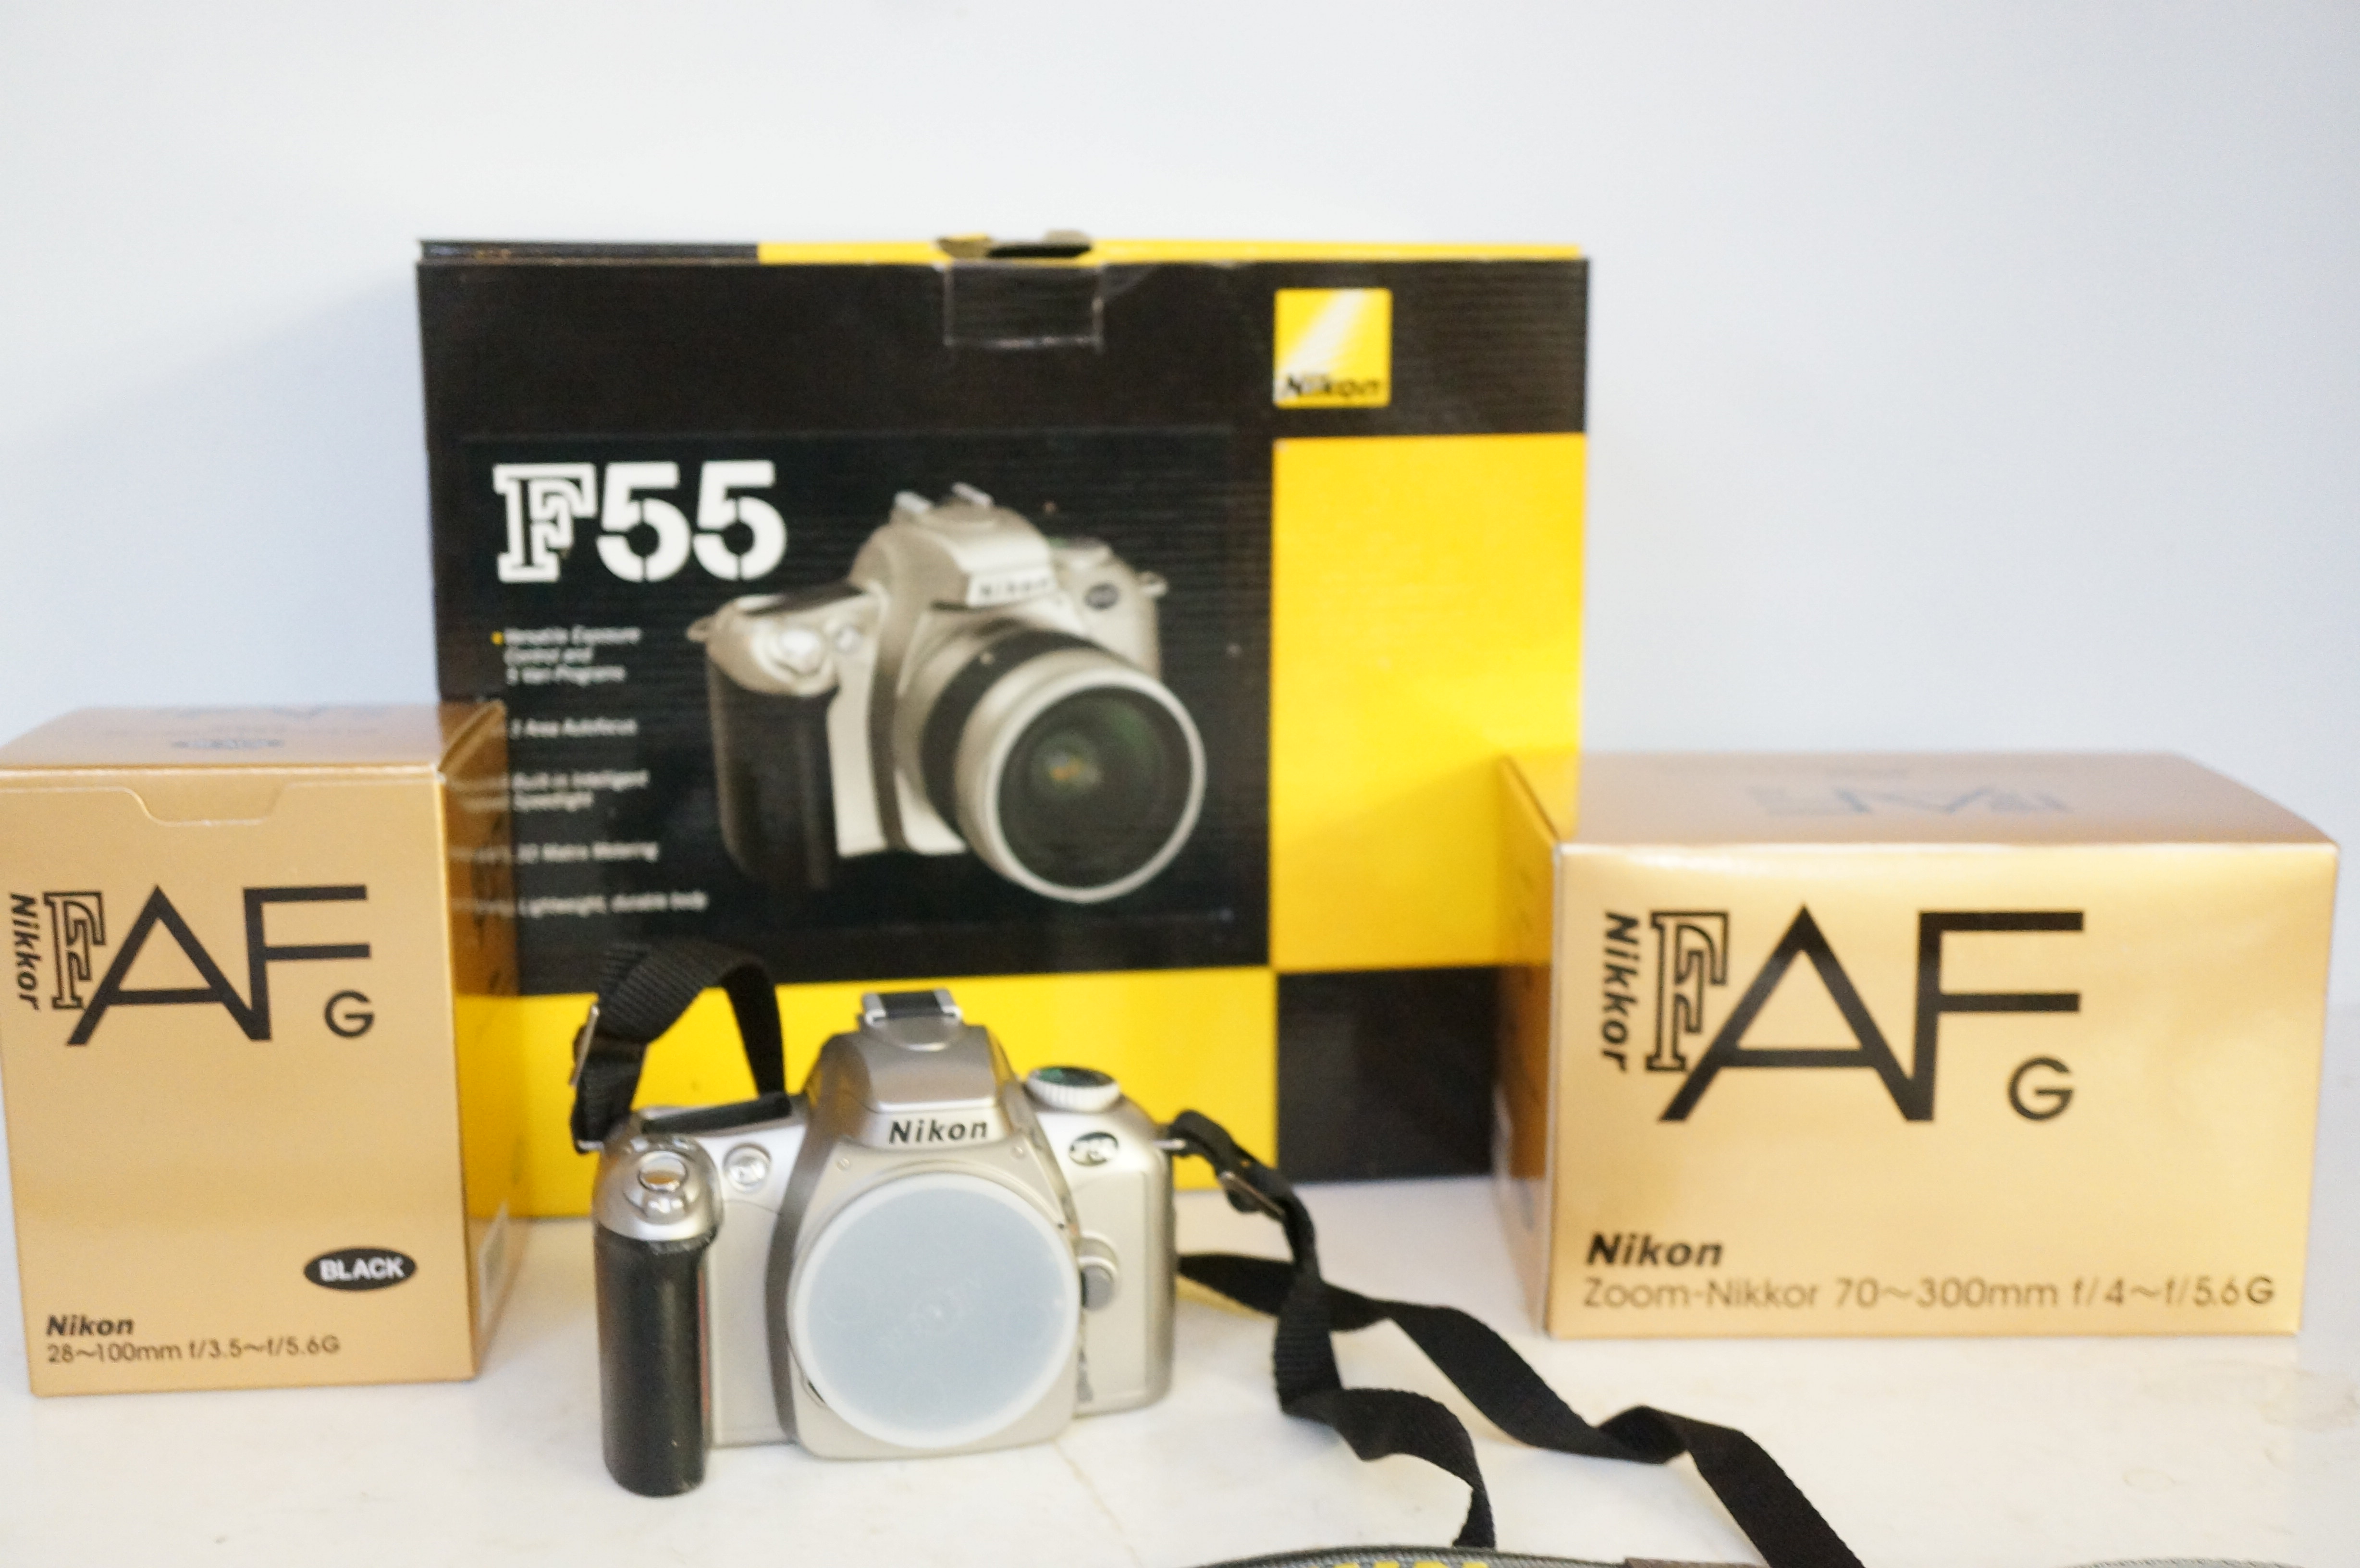 Nikon F55 camera with 2 boxed lenses